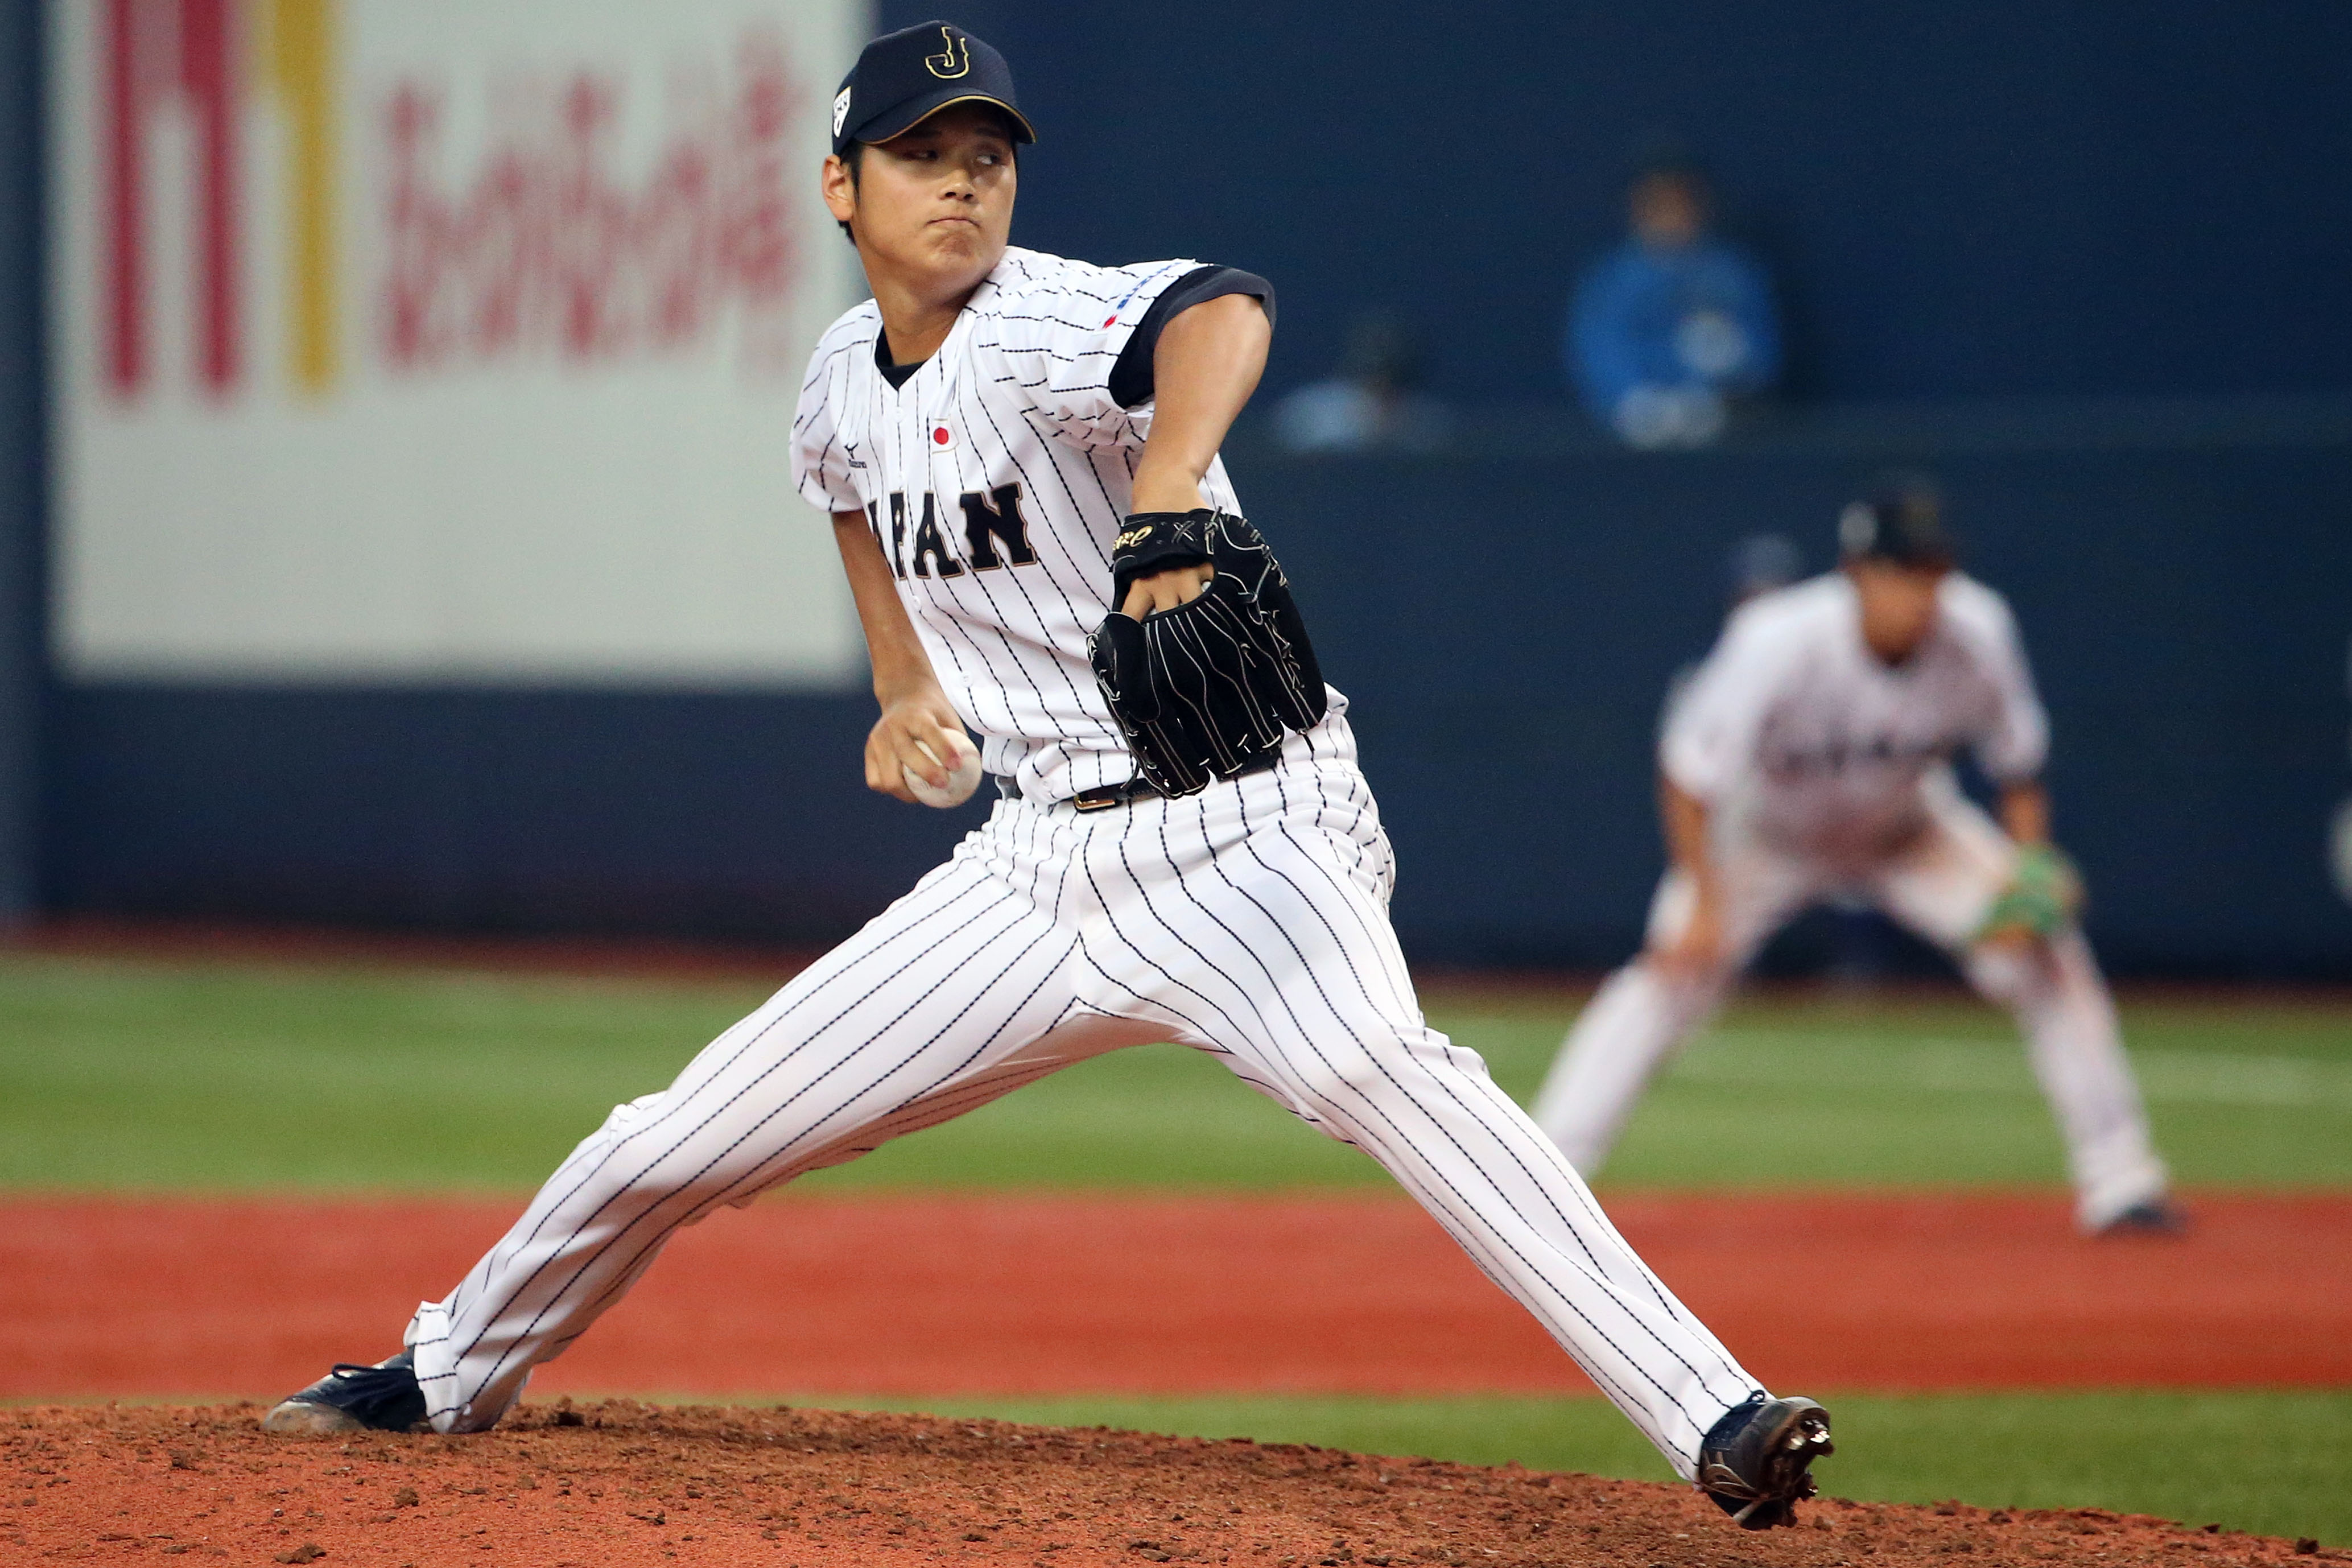 Fighters grant Shohei Otani's wish to pursue move to major leagues